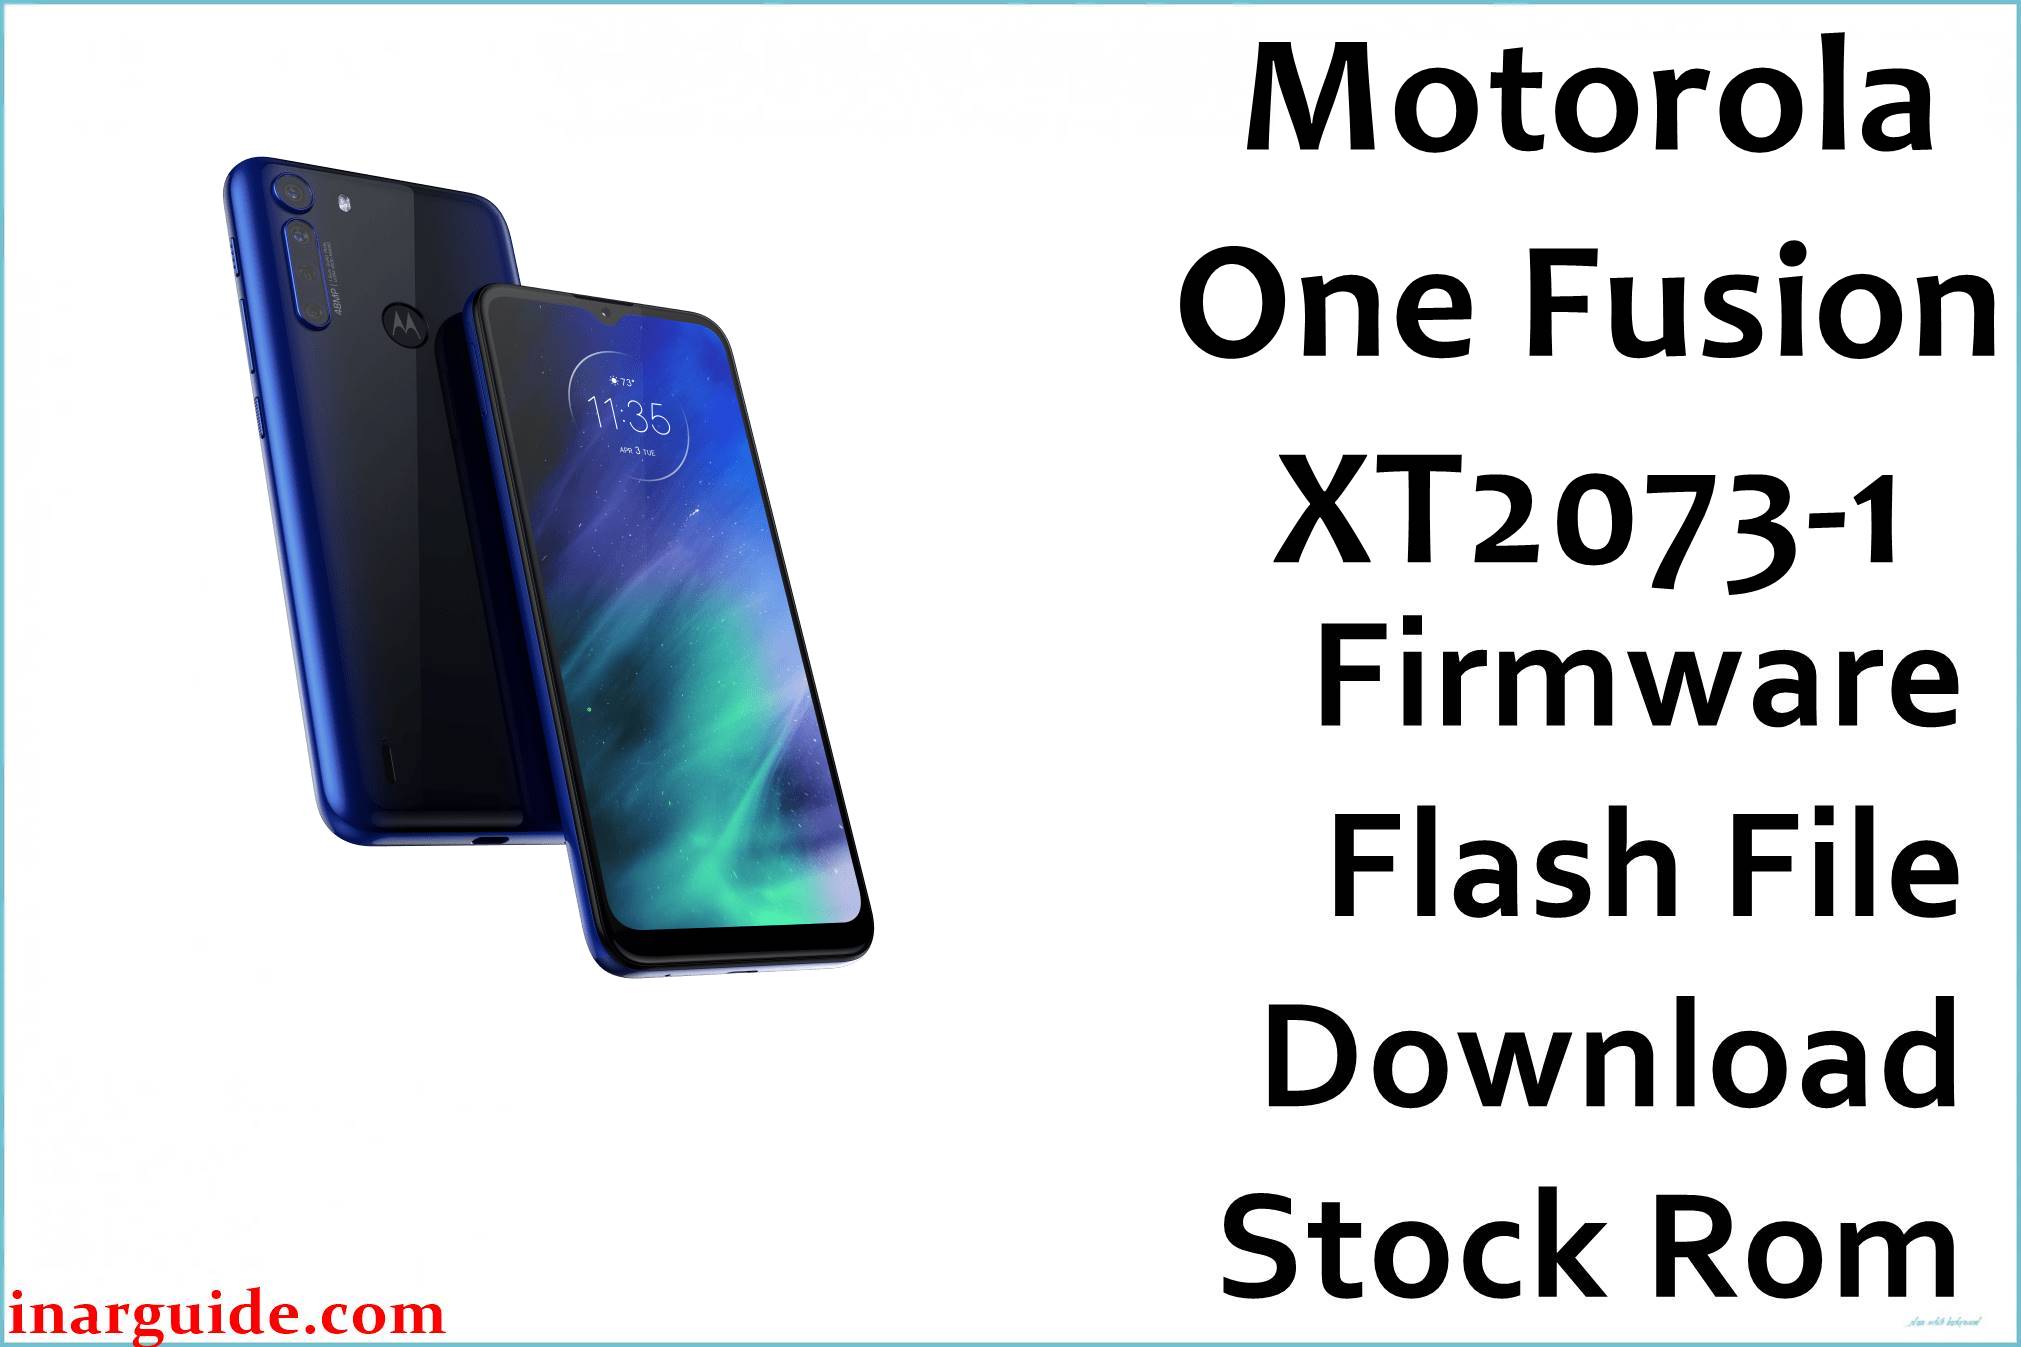 Motorola One Fusion XT2073-1